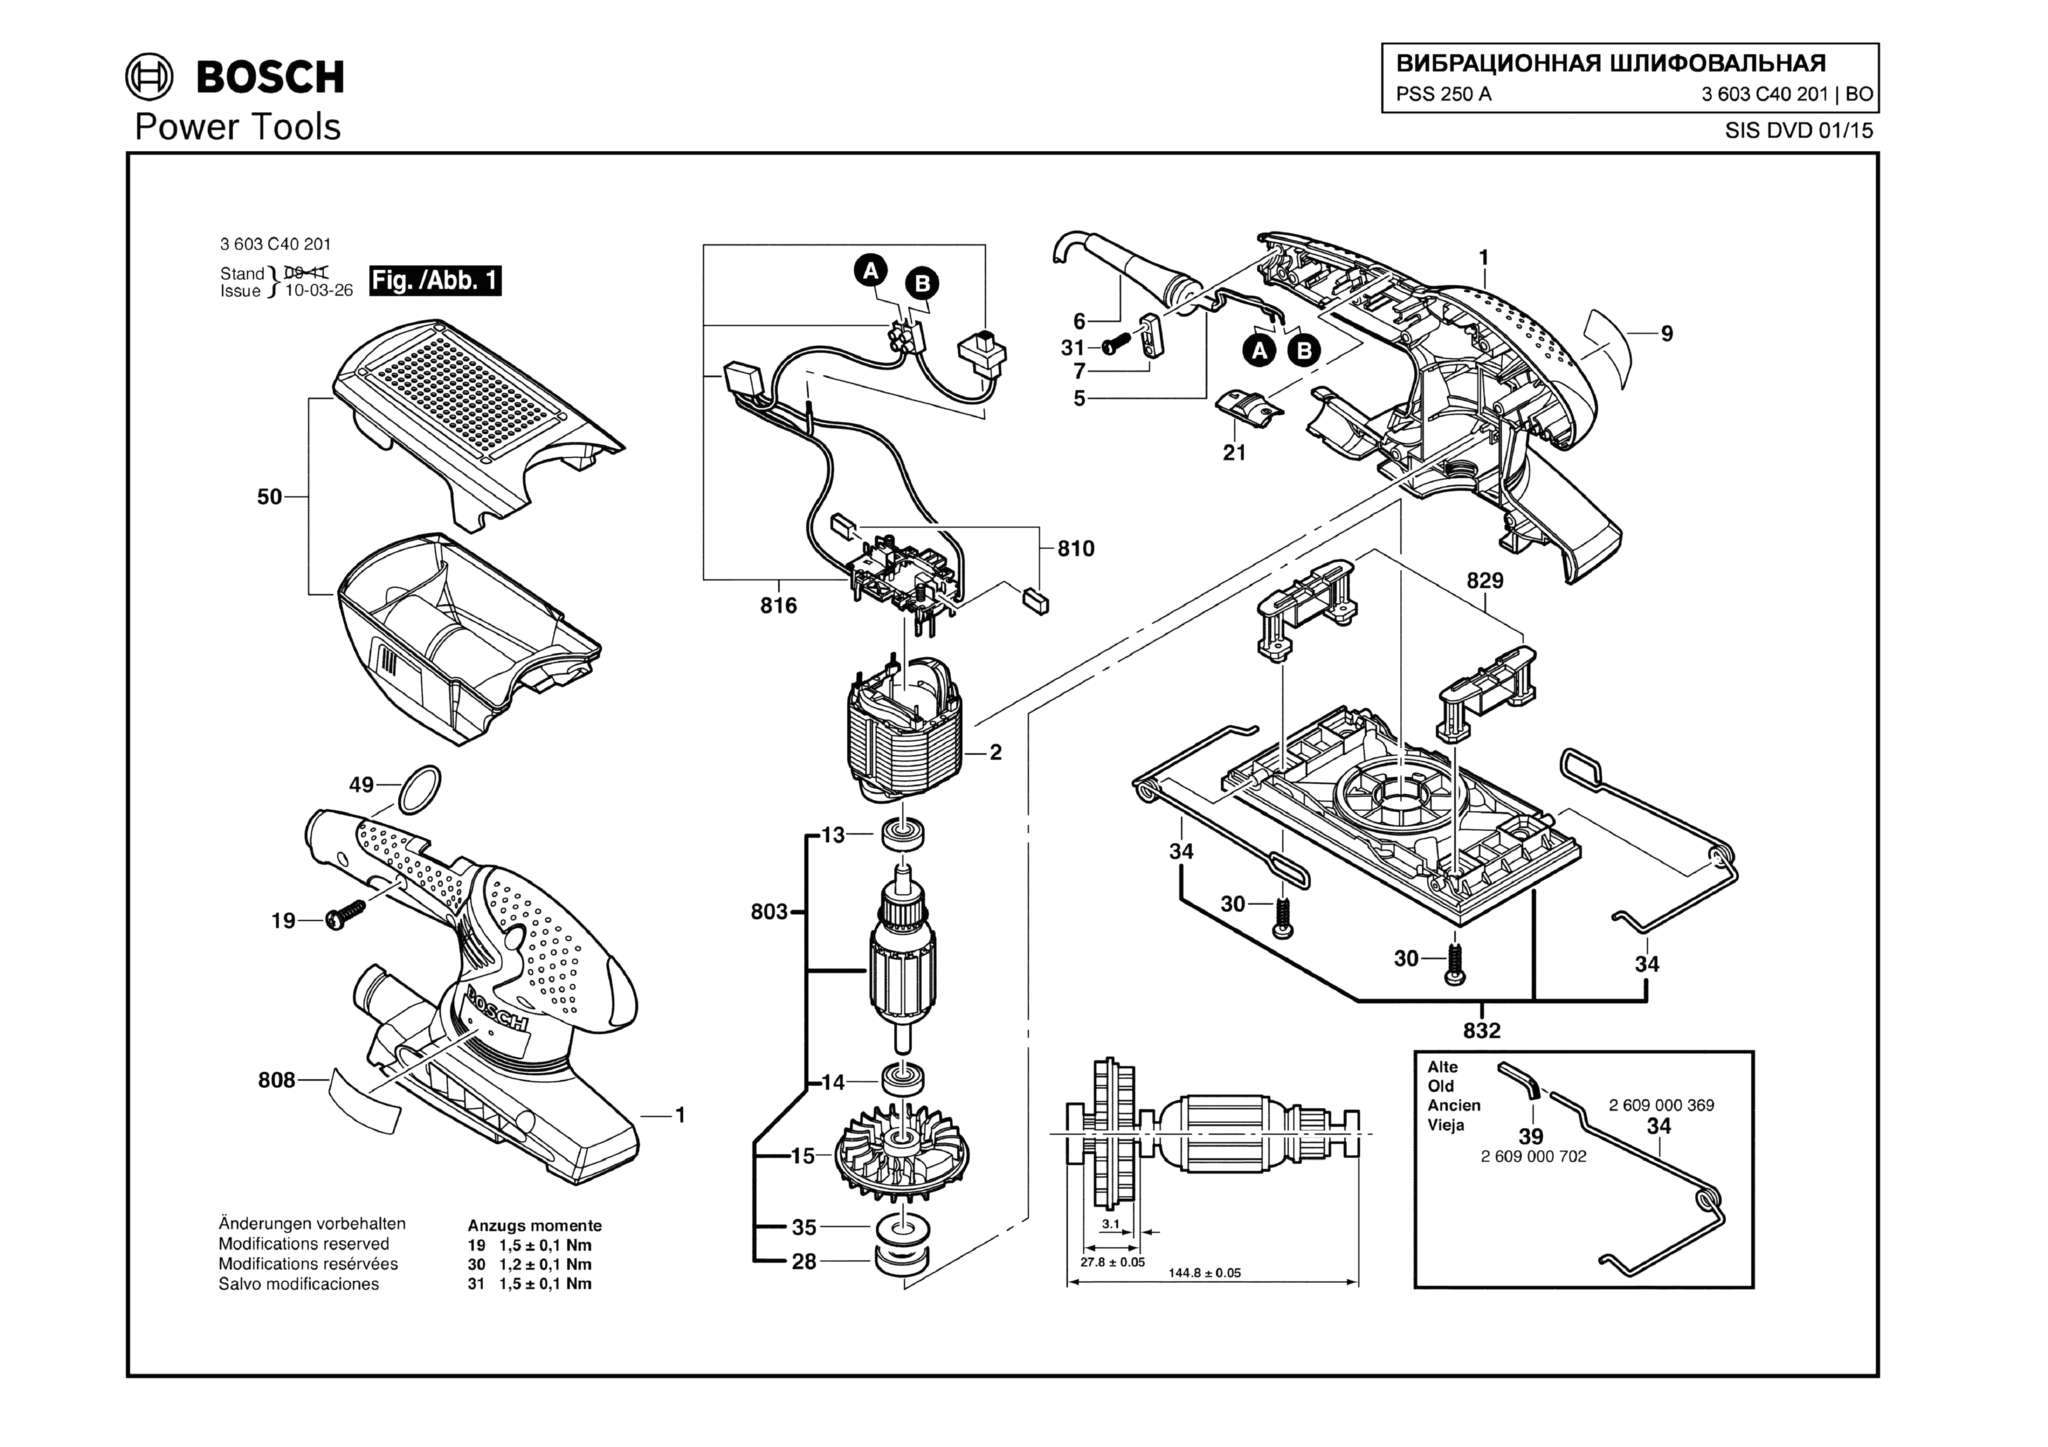 Запчасти, схема и деталировка Bosch PSS 250 A (ТИП 3603C40201)